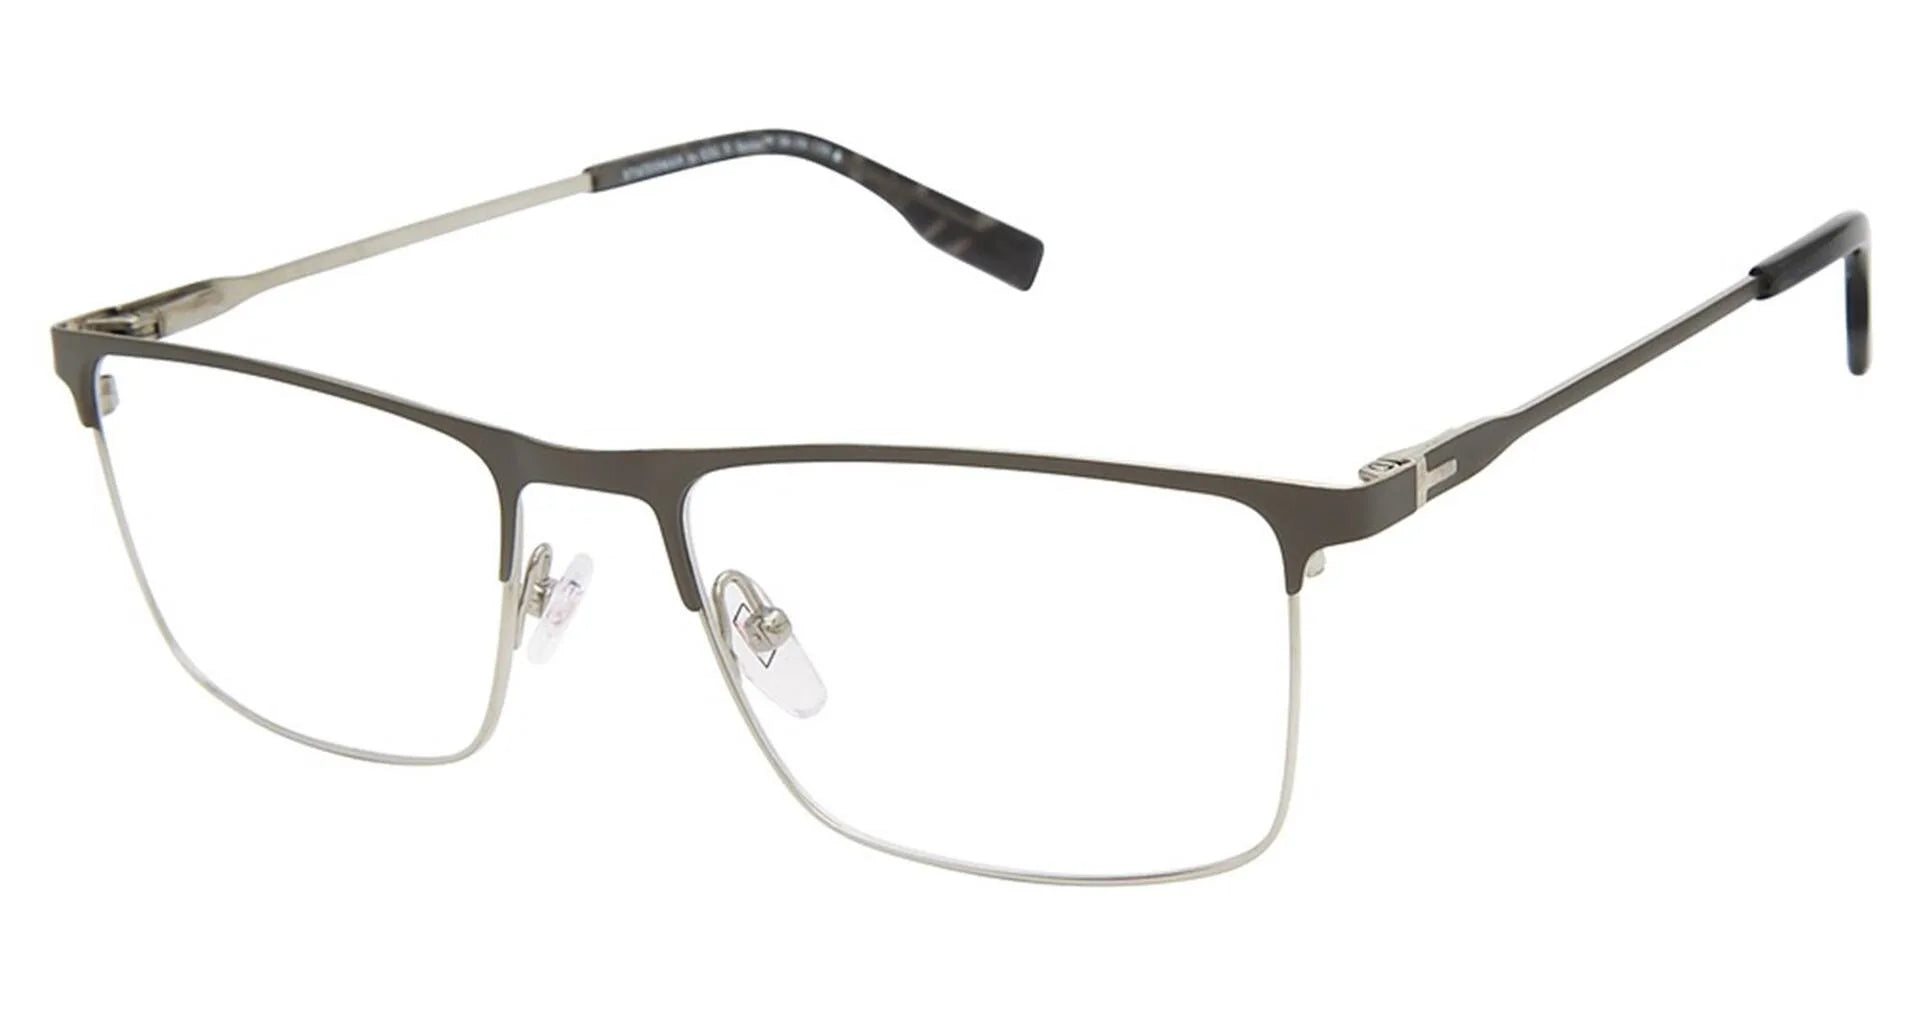 XXL Eyewear Statesman Eyeglasses Gunmetal